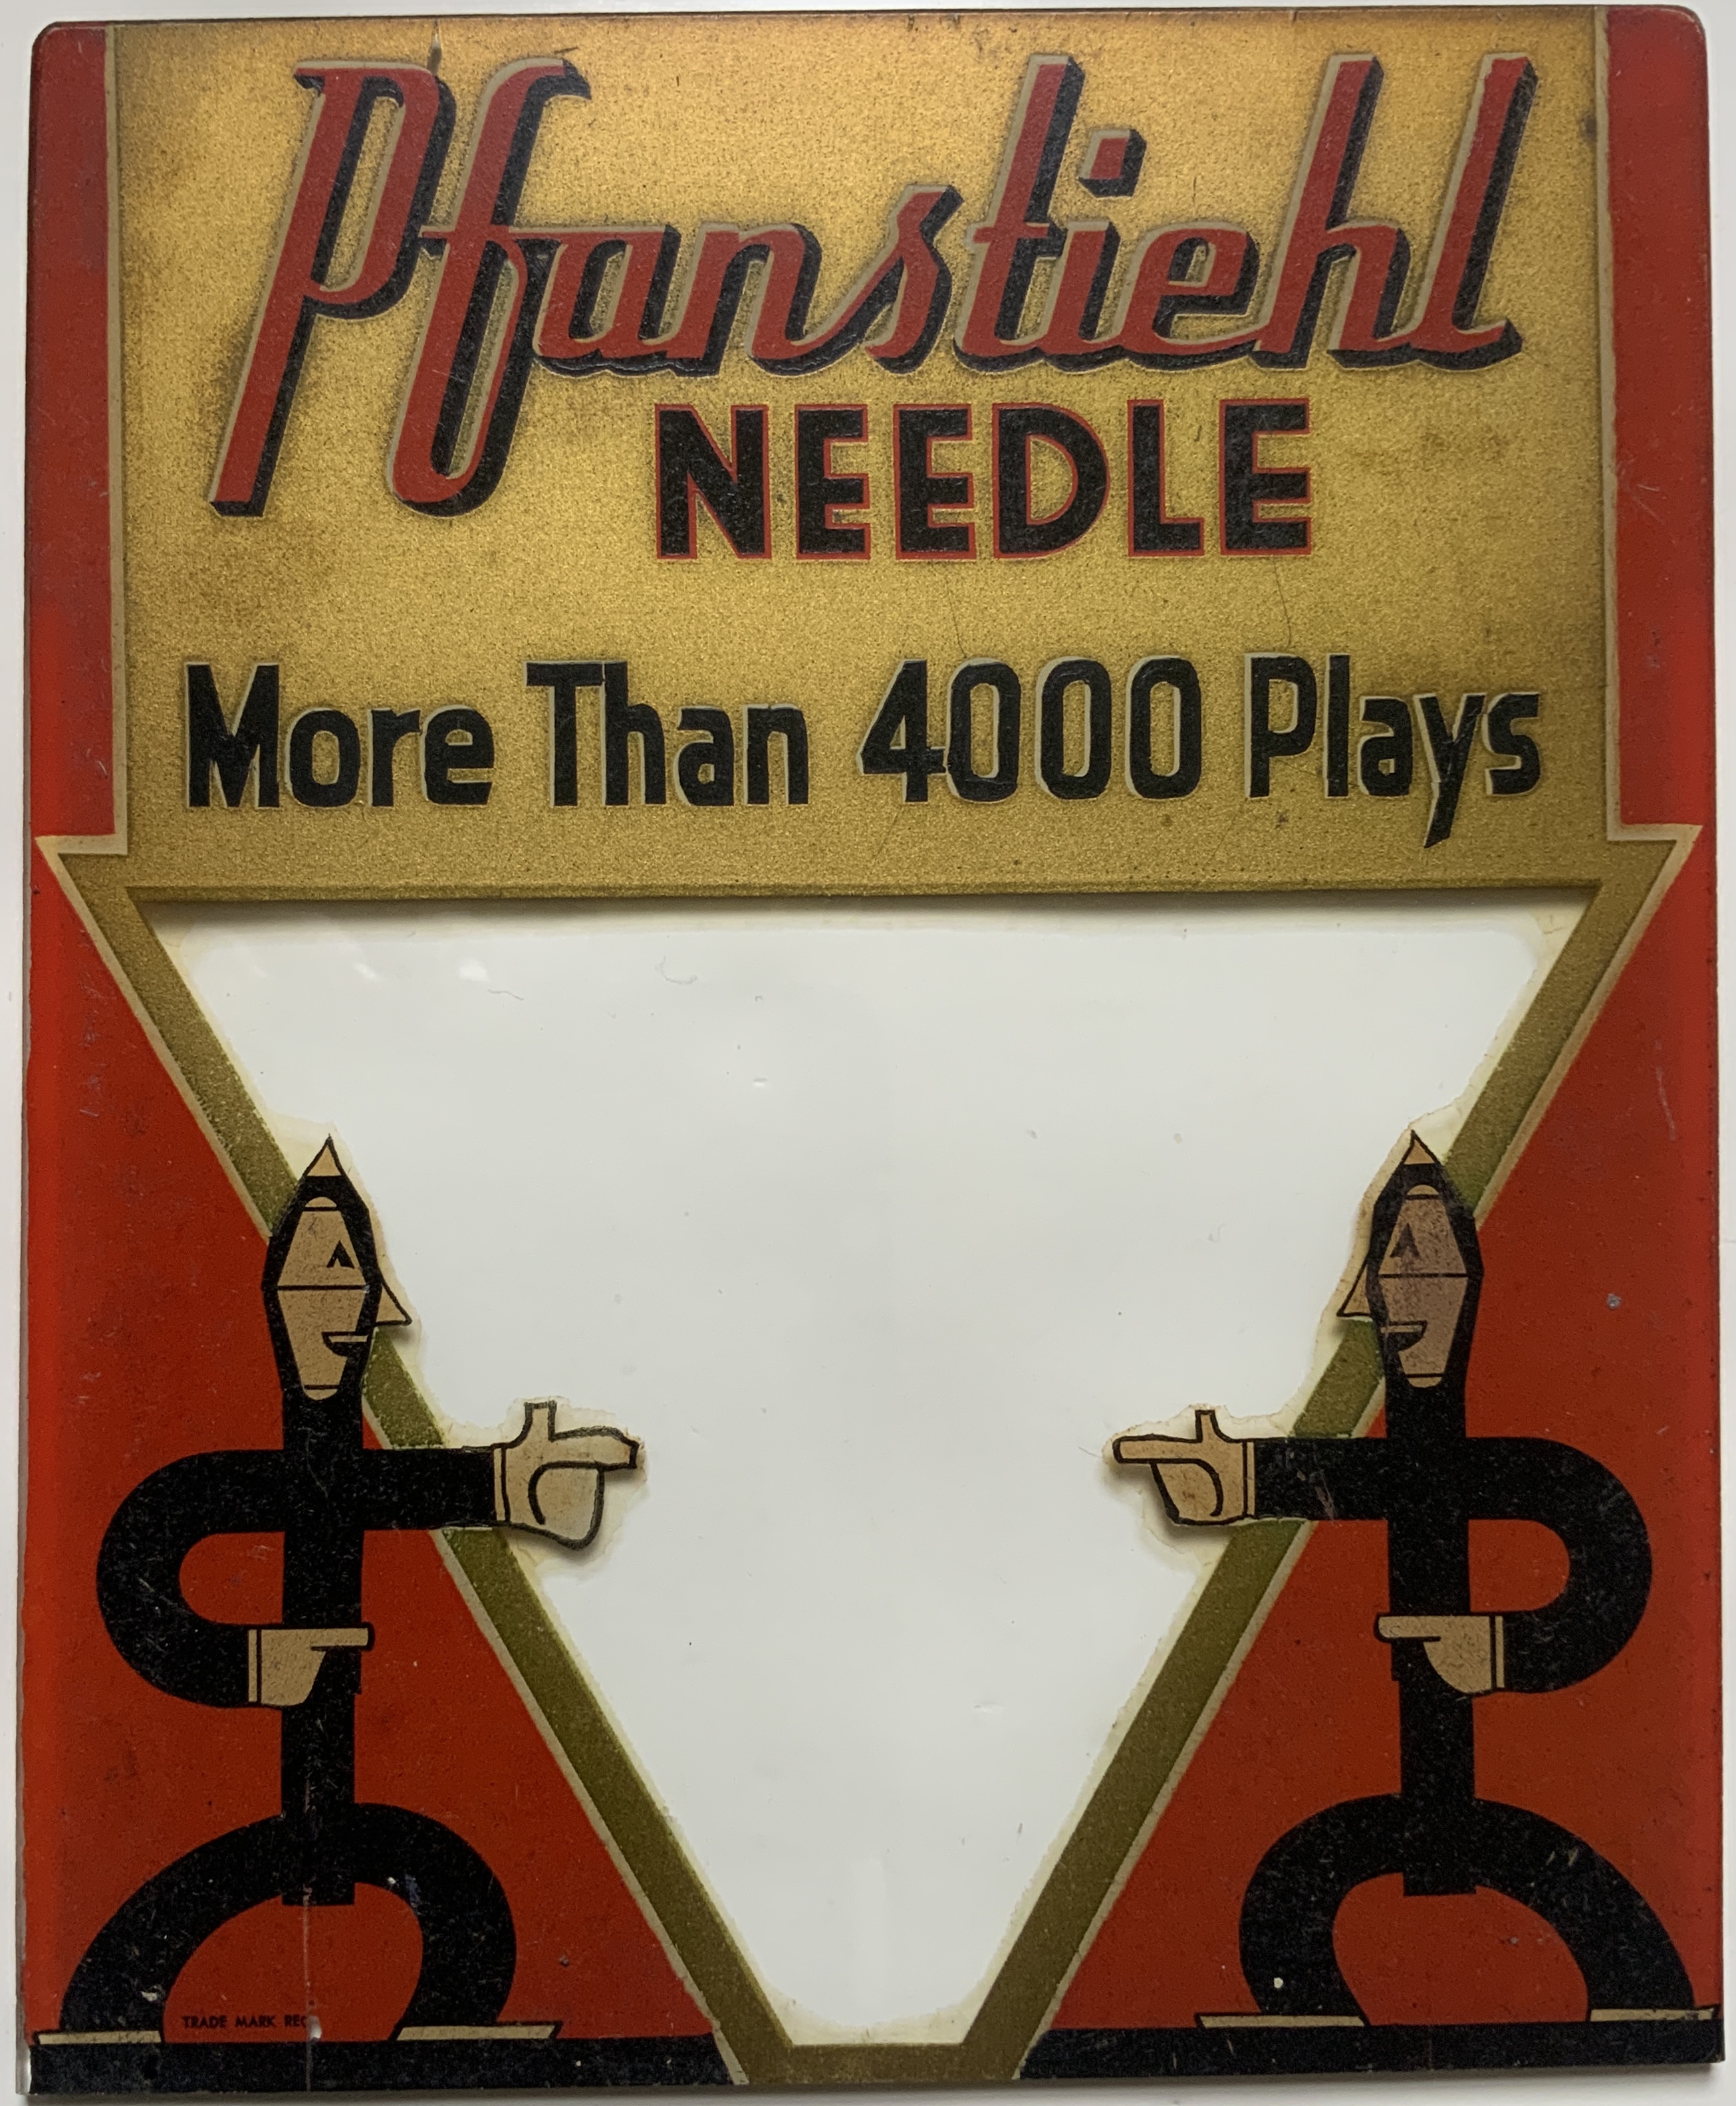 J955	PFANSTIEHL NEEDLE - MORE THAN 4000 PLAYS